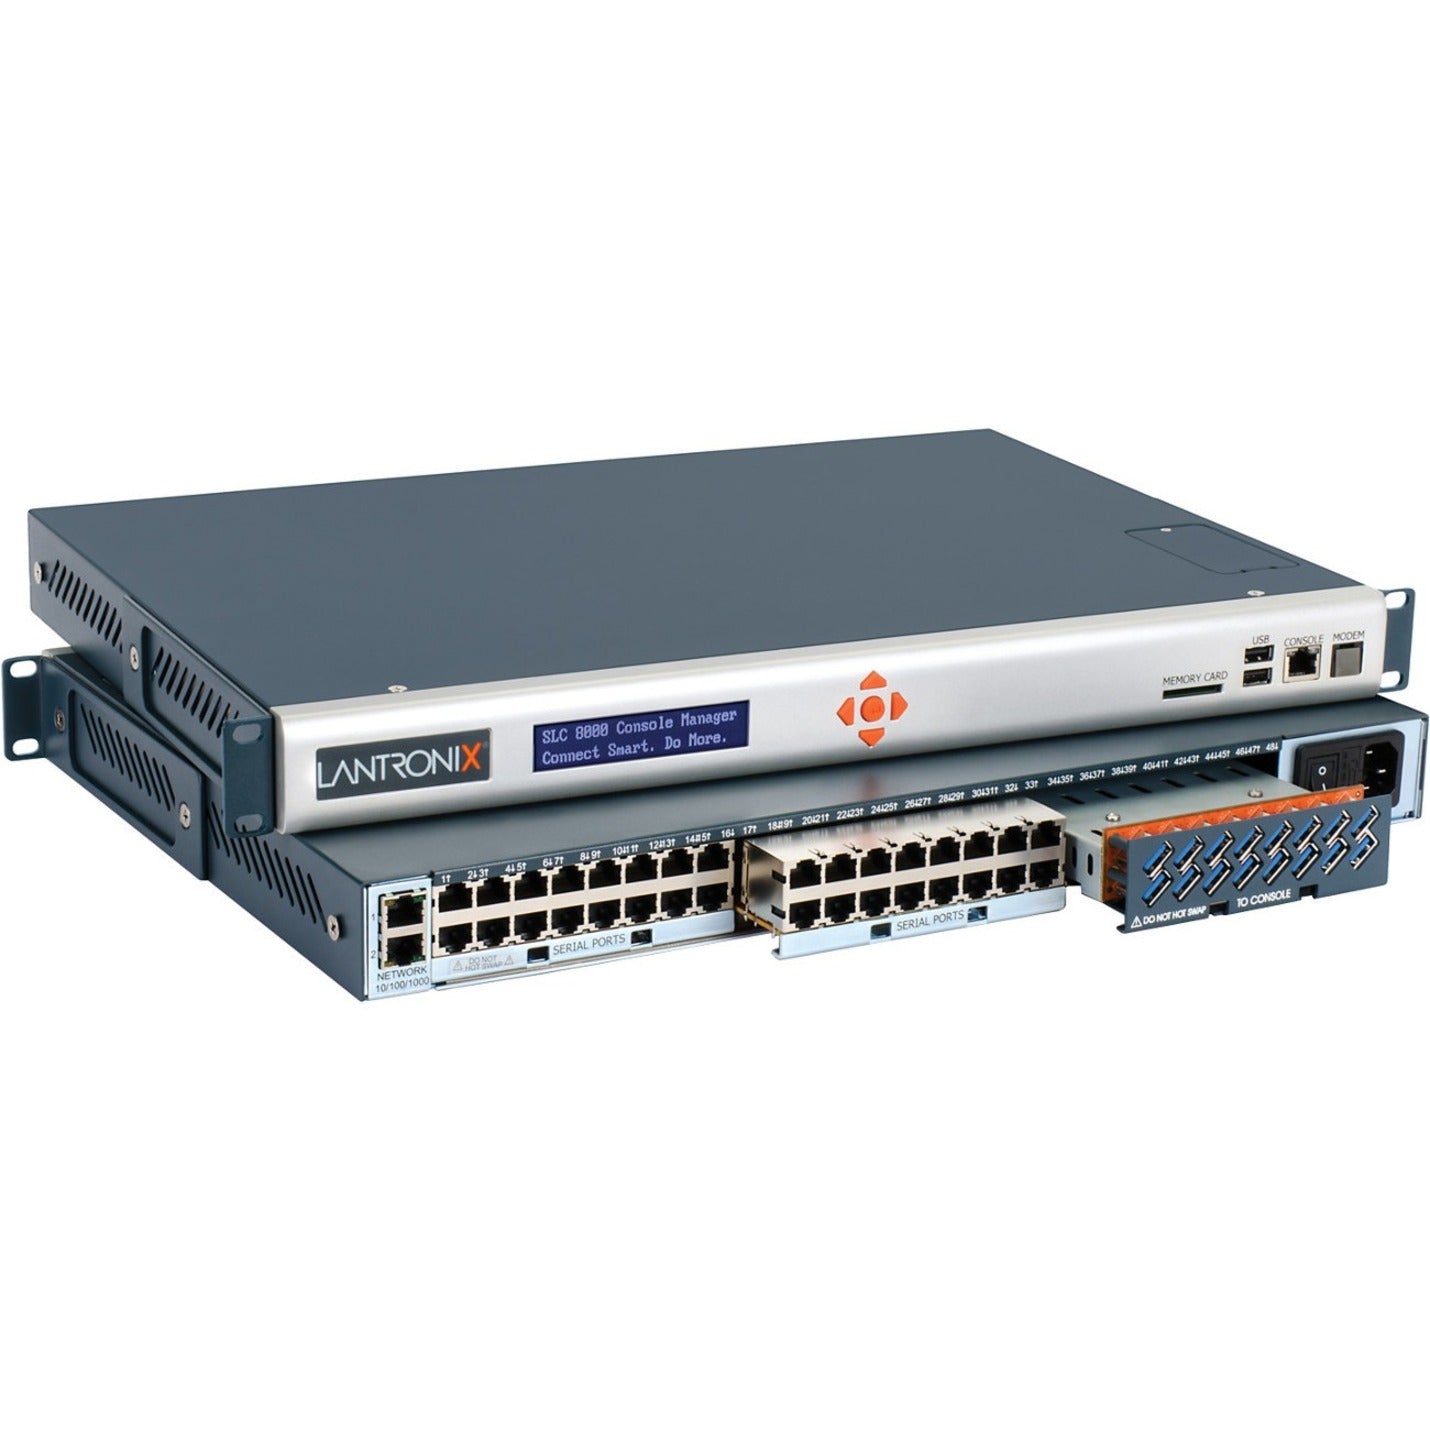 Lantronix SLC80322211S SLC 8000 Device Server, 32 Serial Ports, 2 Network Ports, Gigabit Ethernet